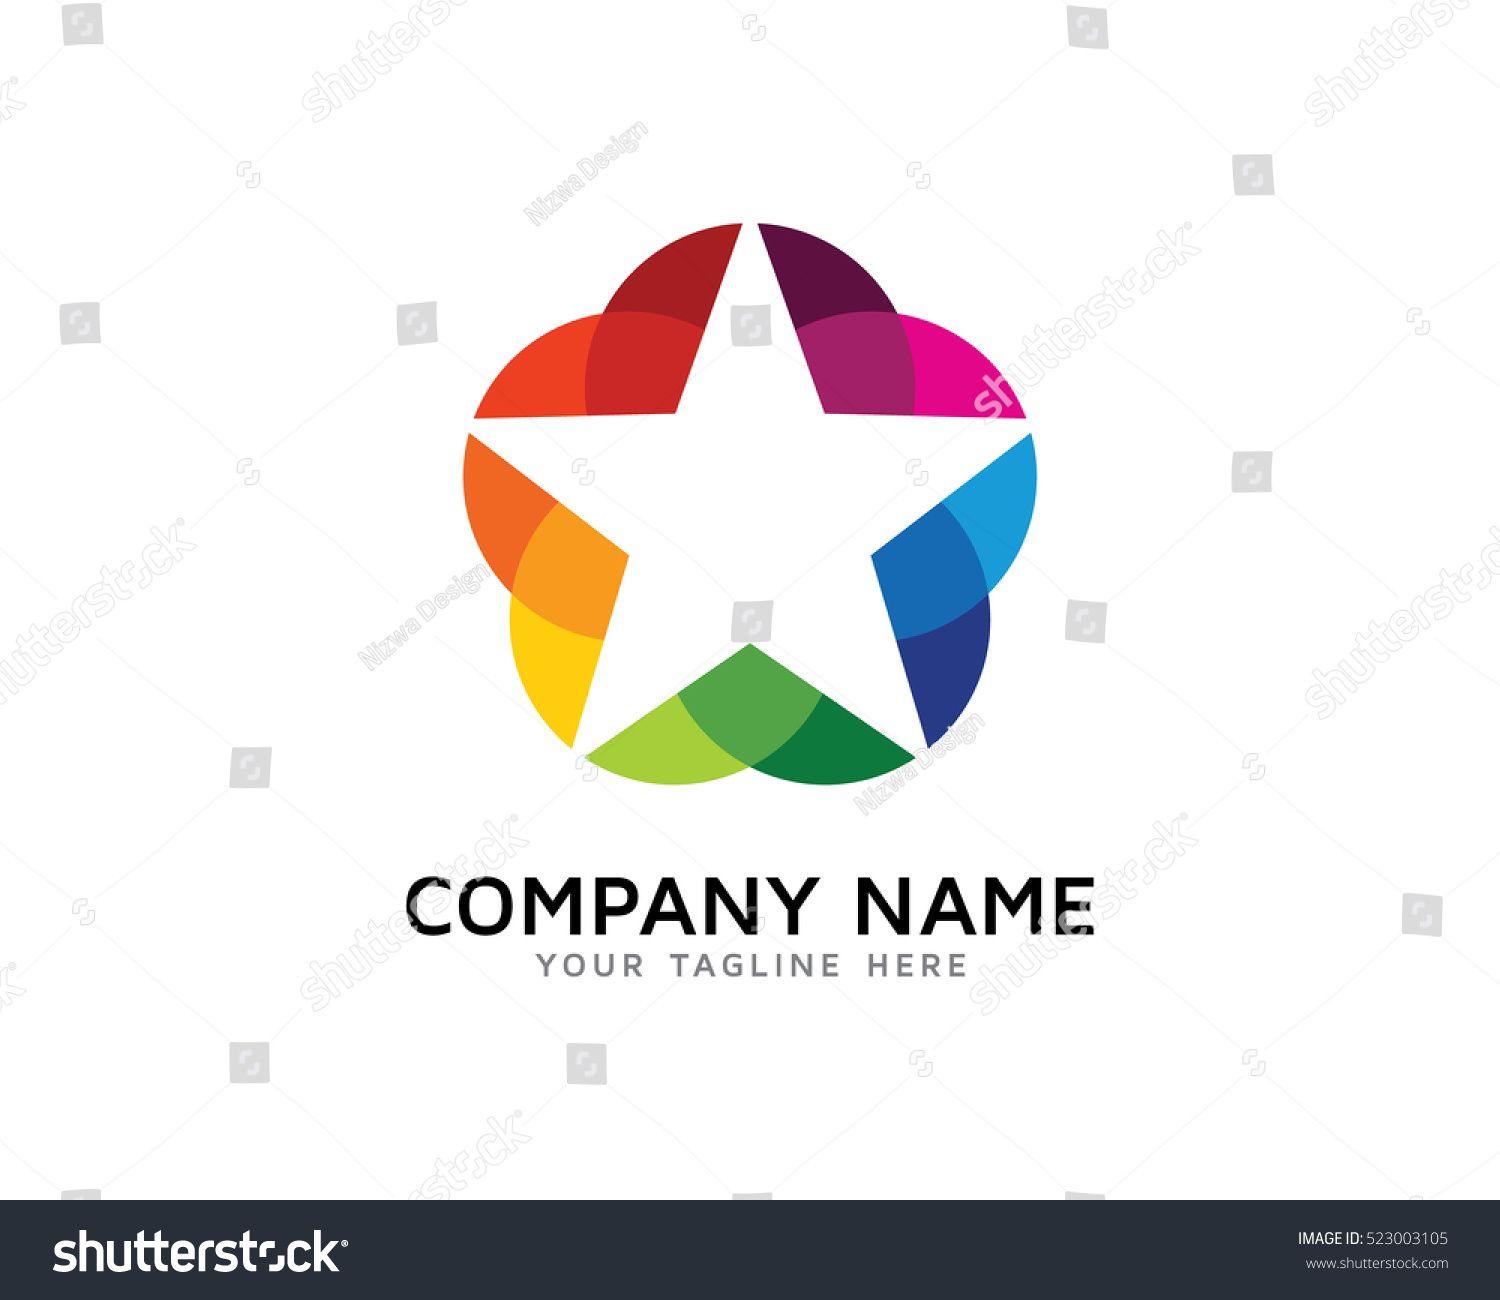 Unique Star Logo - Colorful Circle Star Logo Design Template | Star Logos | Pinterest ...